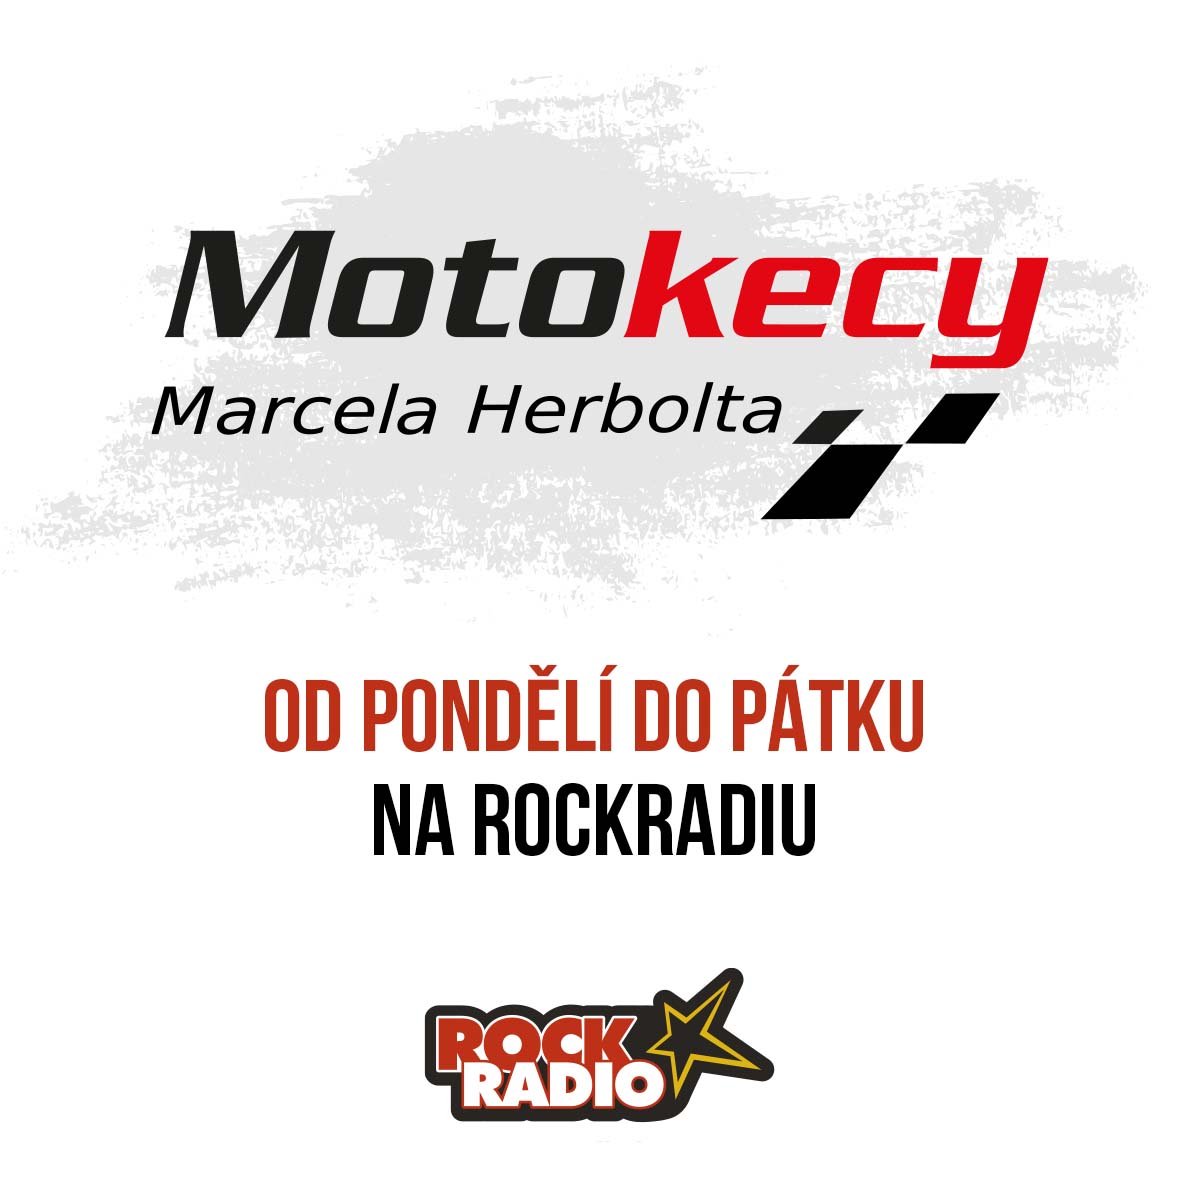 Motokecy Marcela Herbolta - pozvánka na akci s legendou! Giacomo Agostini